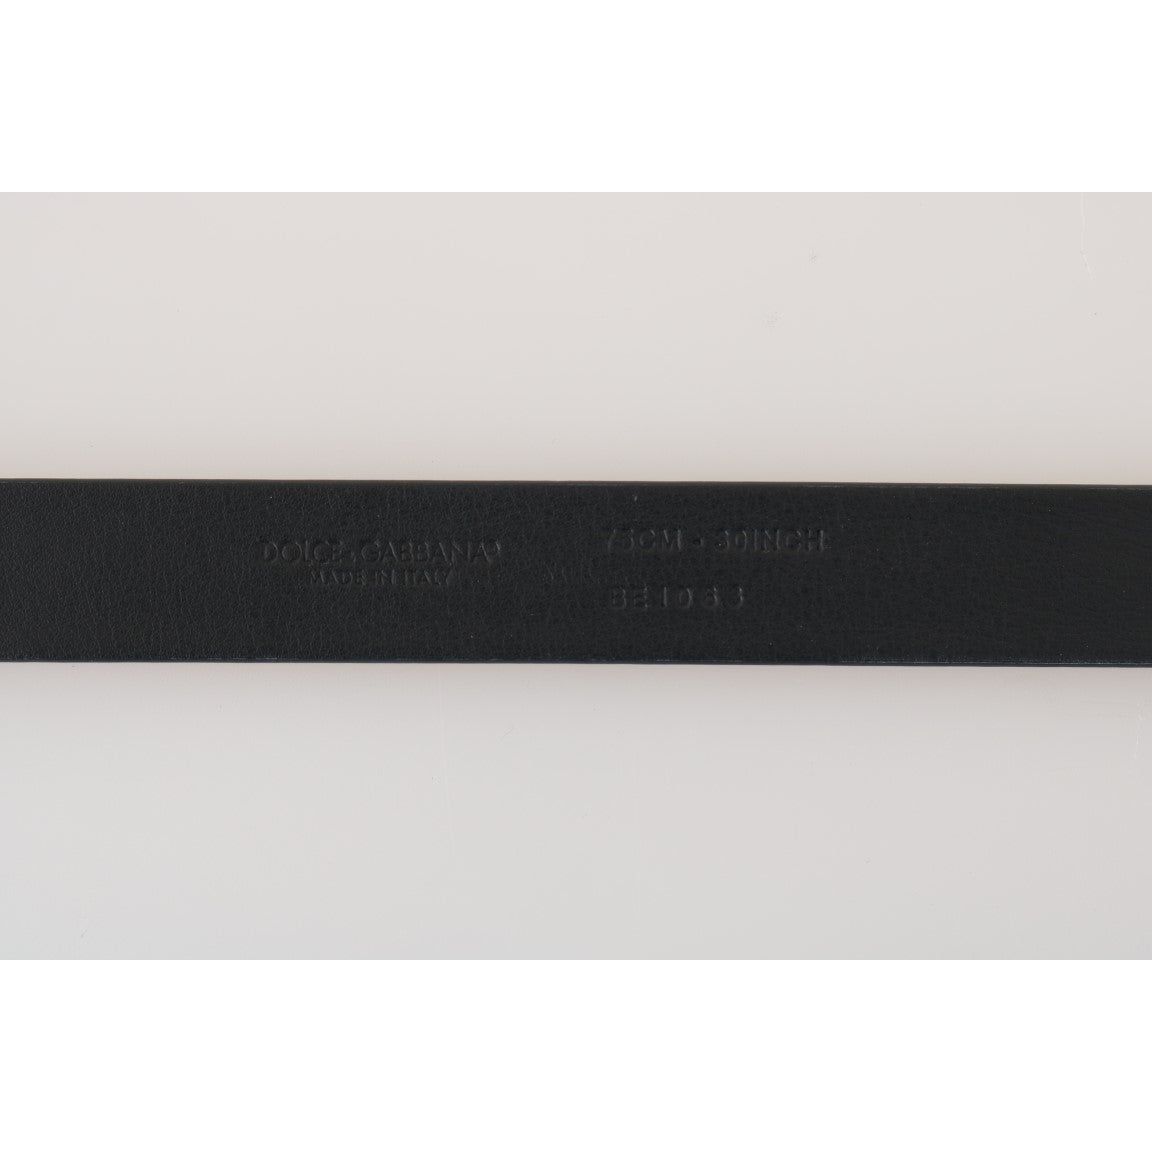 Dolce & Gabbana Elegant Chevron Leather Waist Belt black-white-chevron-pattern-leather-belt Belt 496158-black-white-chevron-pattern-leather-belt-3.jpg